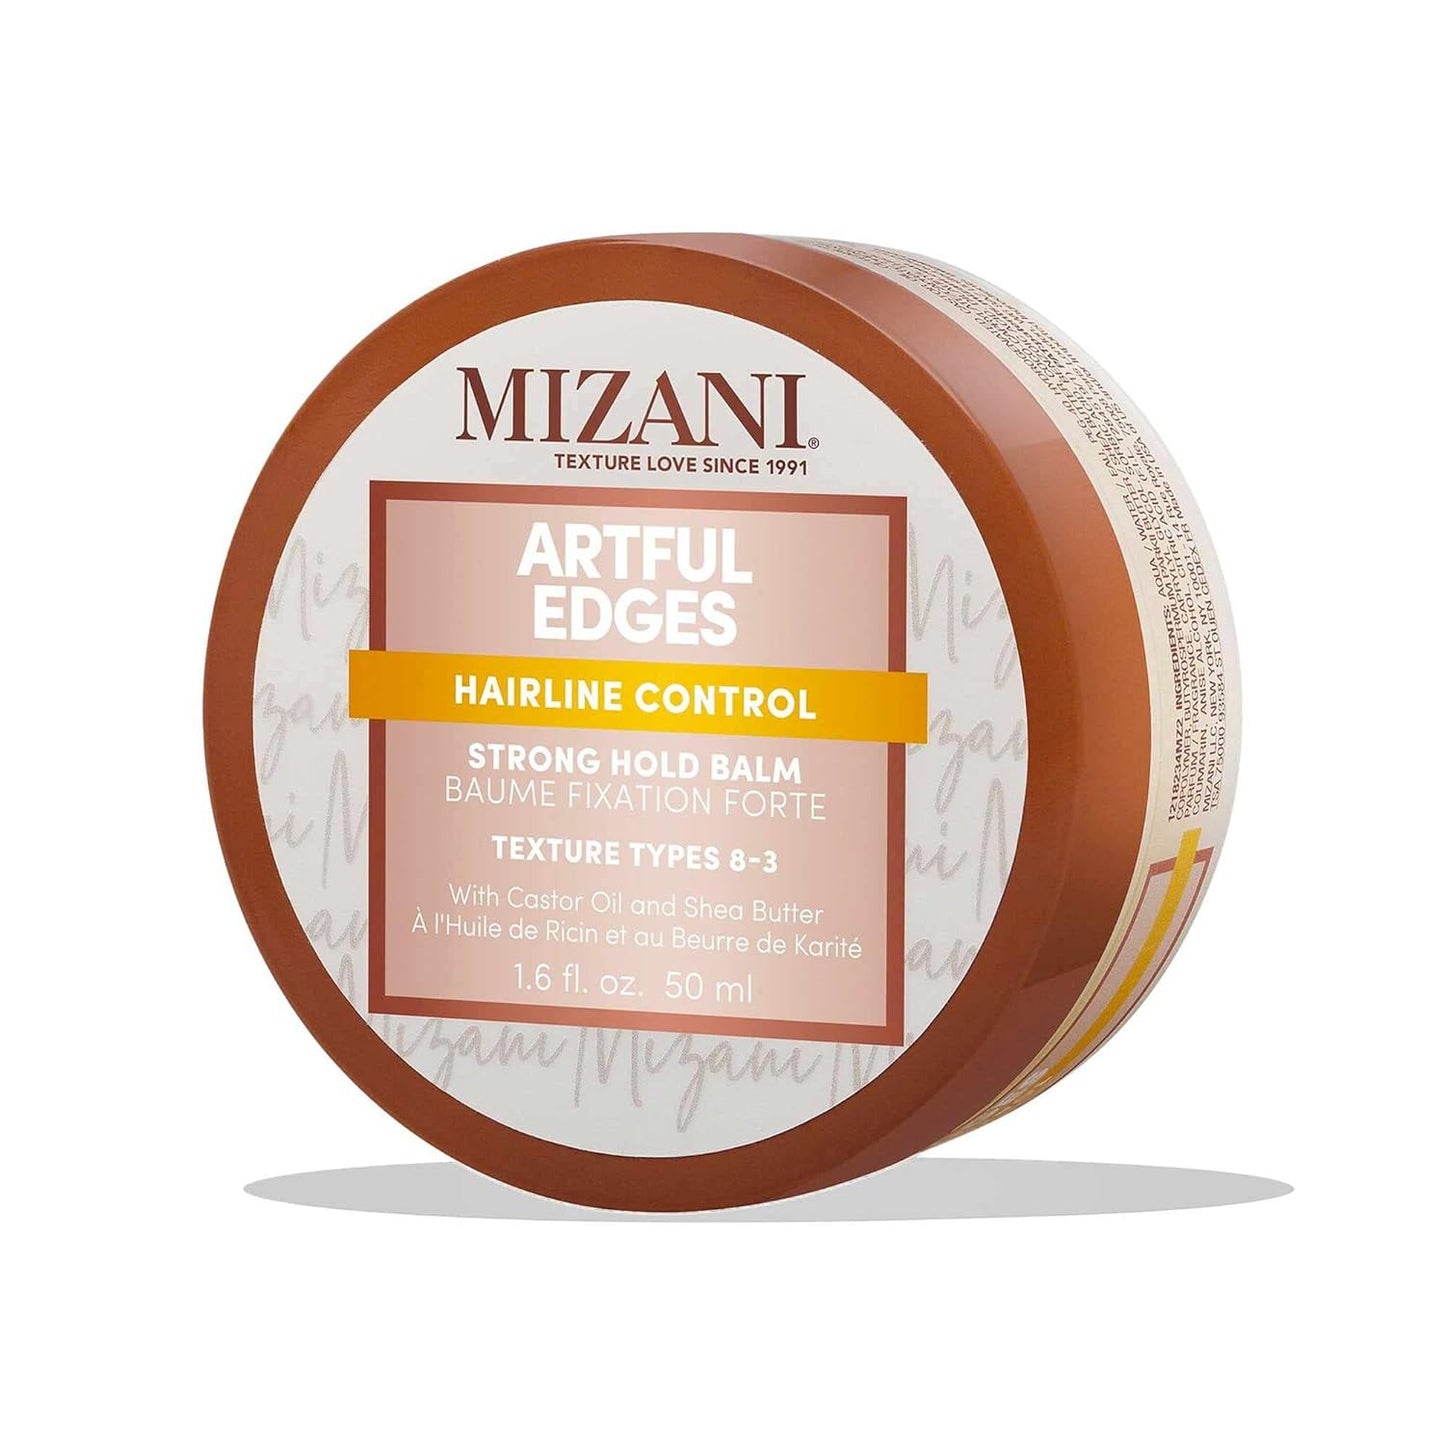 [WHOLESALE] MIZANI ARTFUL EDGES HAIRLINE CONDROLBALM 1.6 OZ